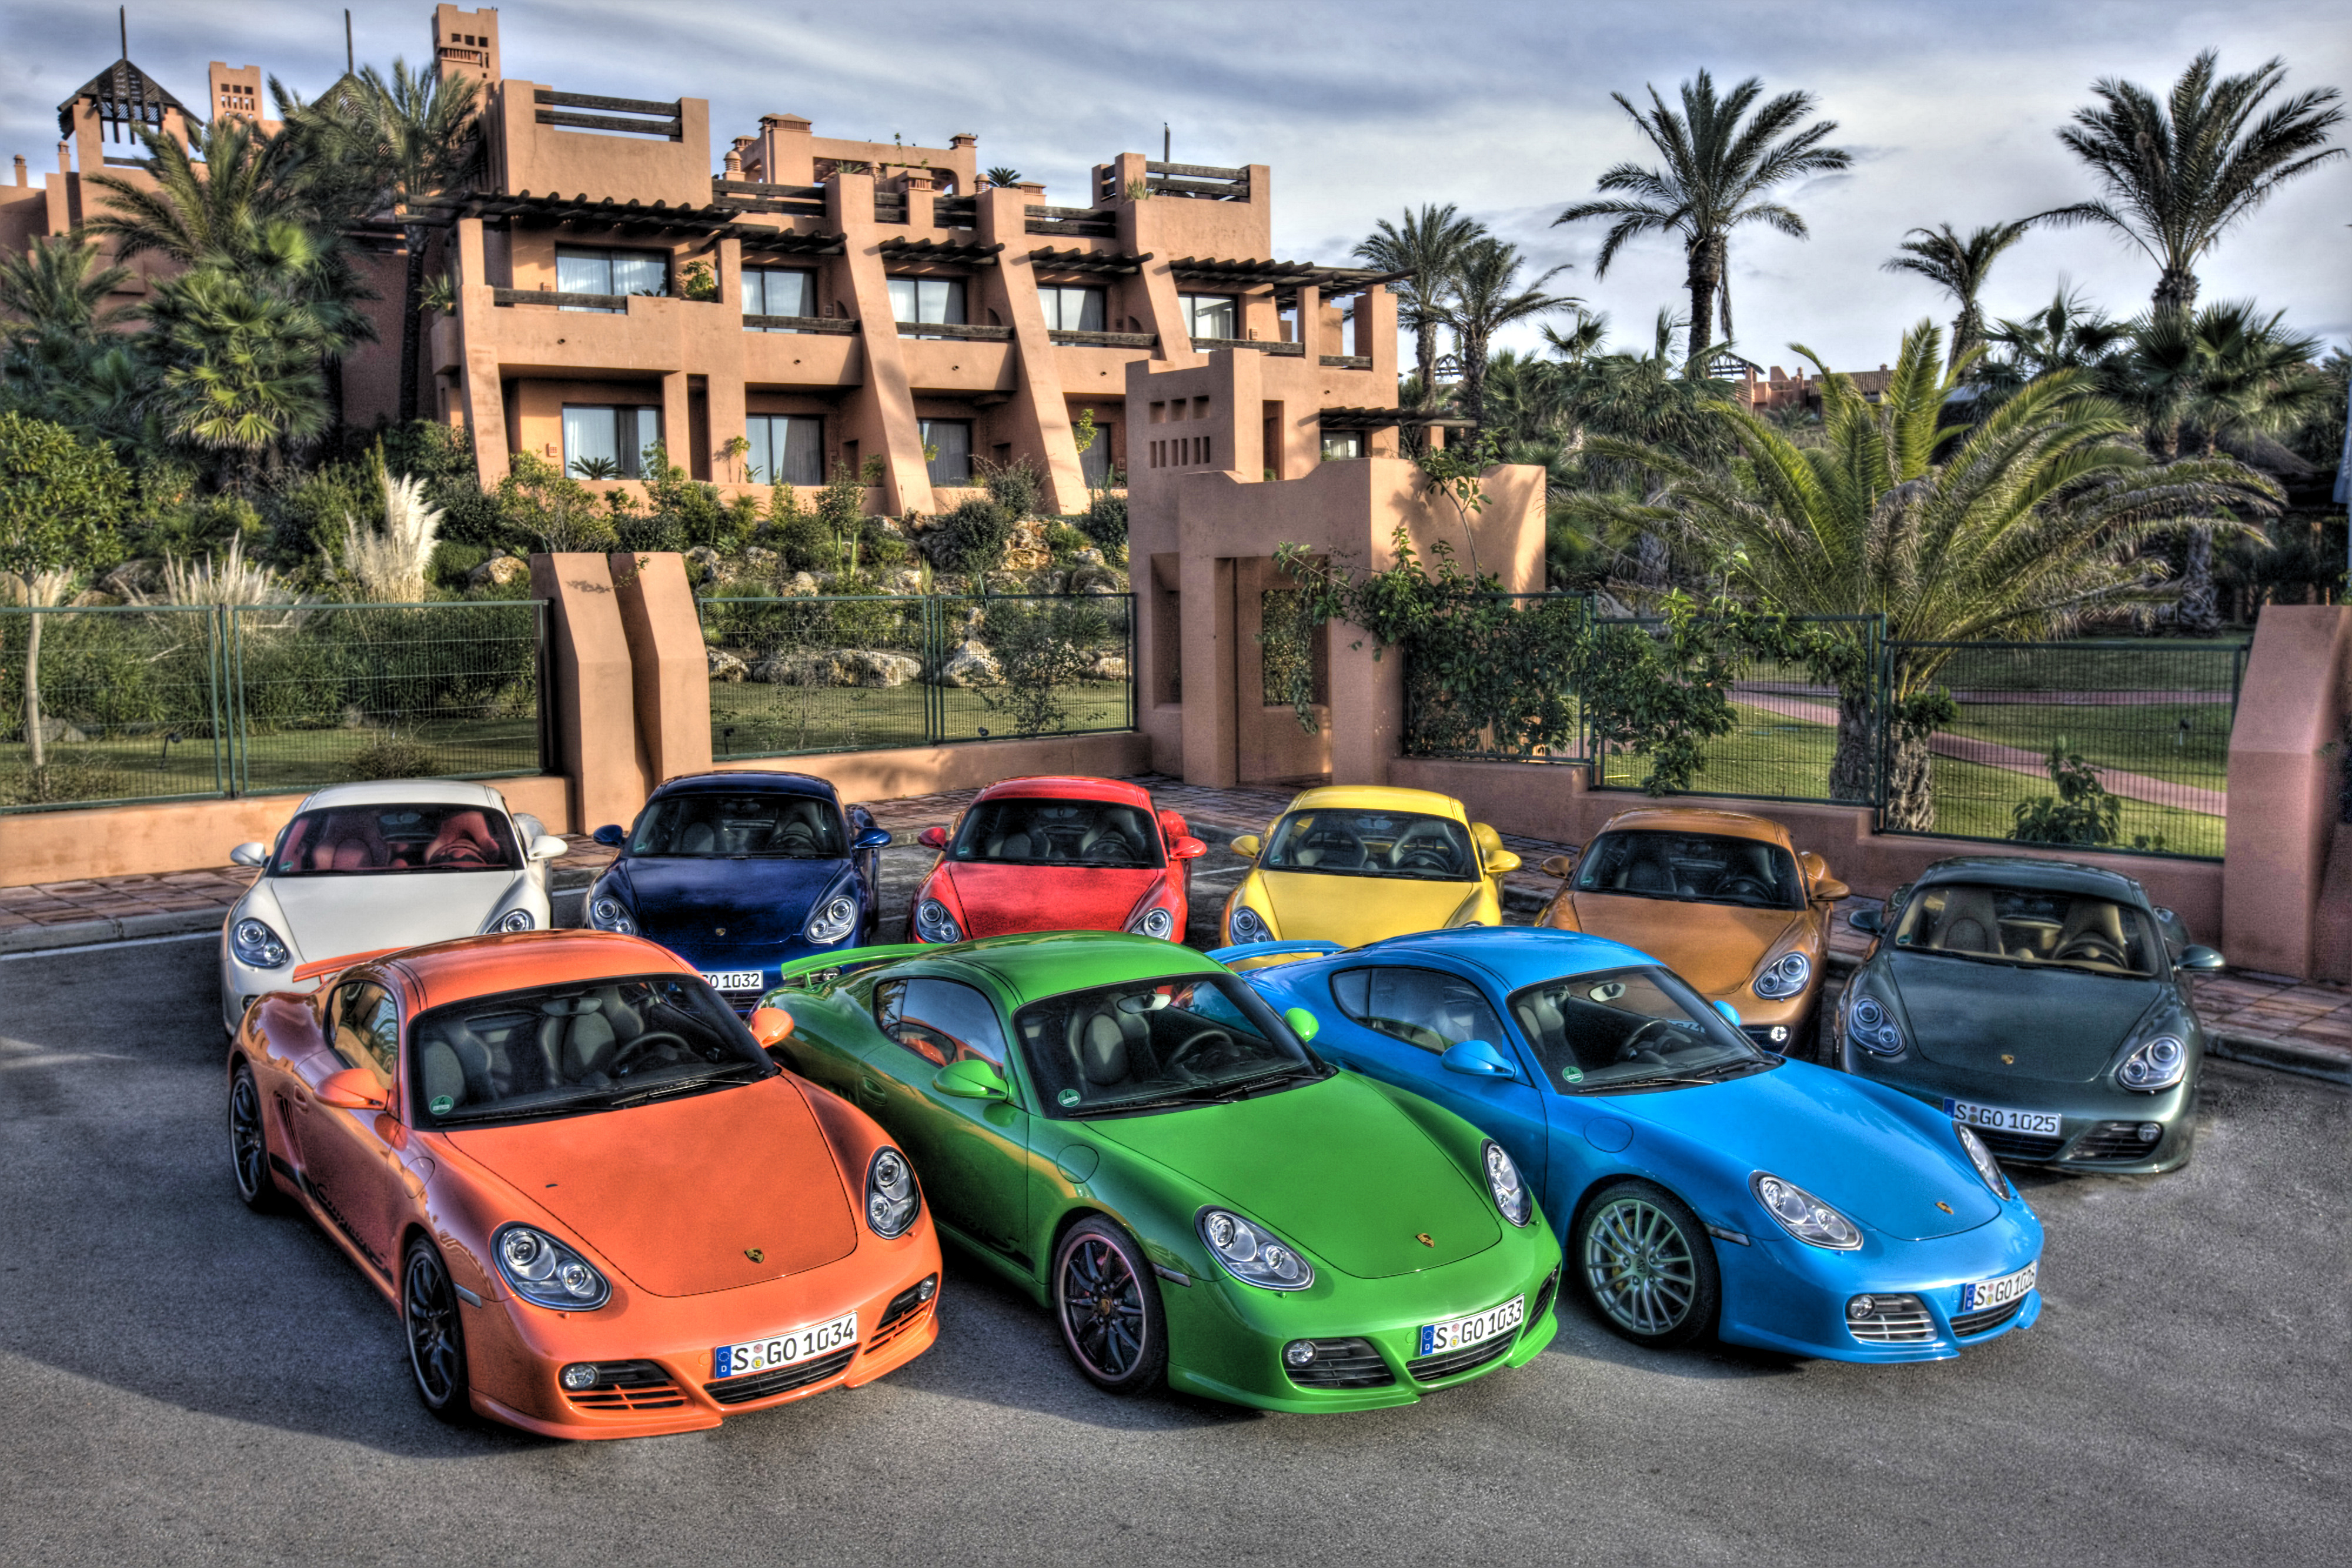 Красочная машина. Разные машины. Машины разных цветов. Разноцветные машины. Много машин.